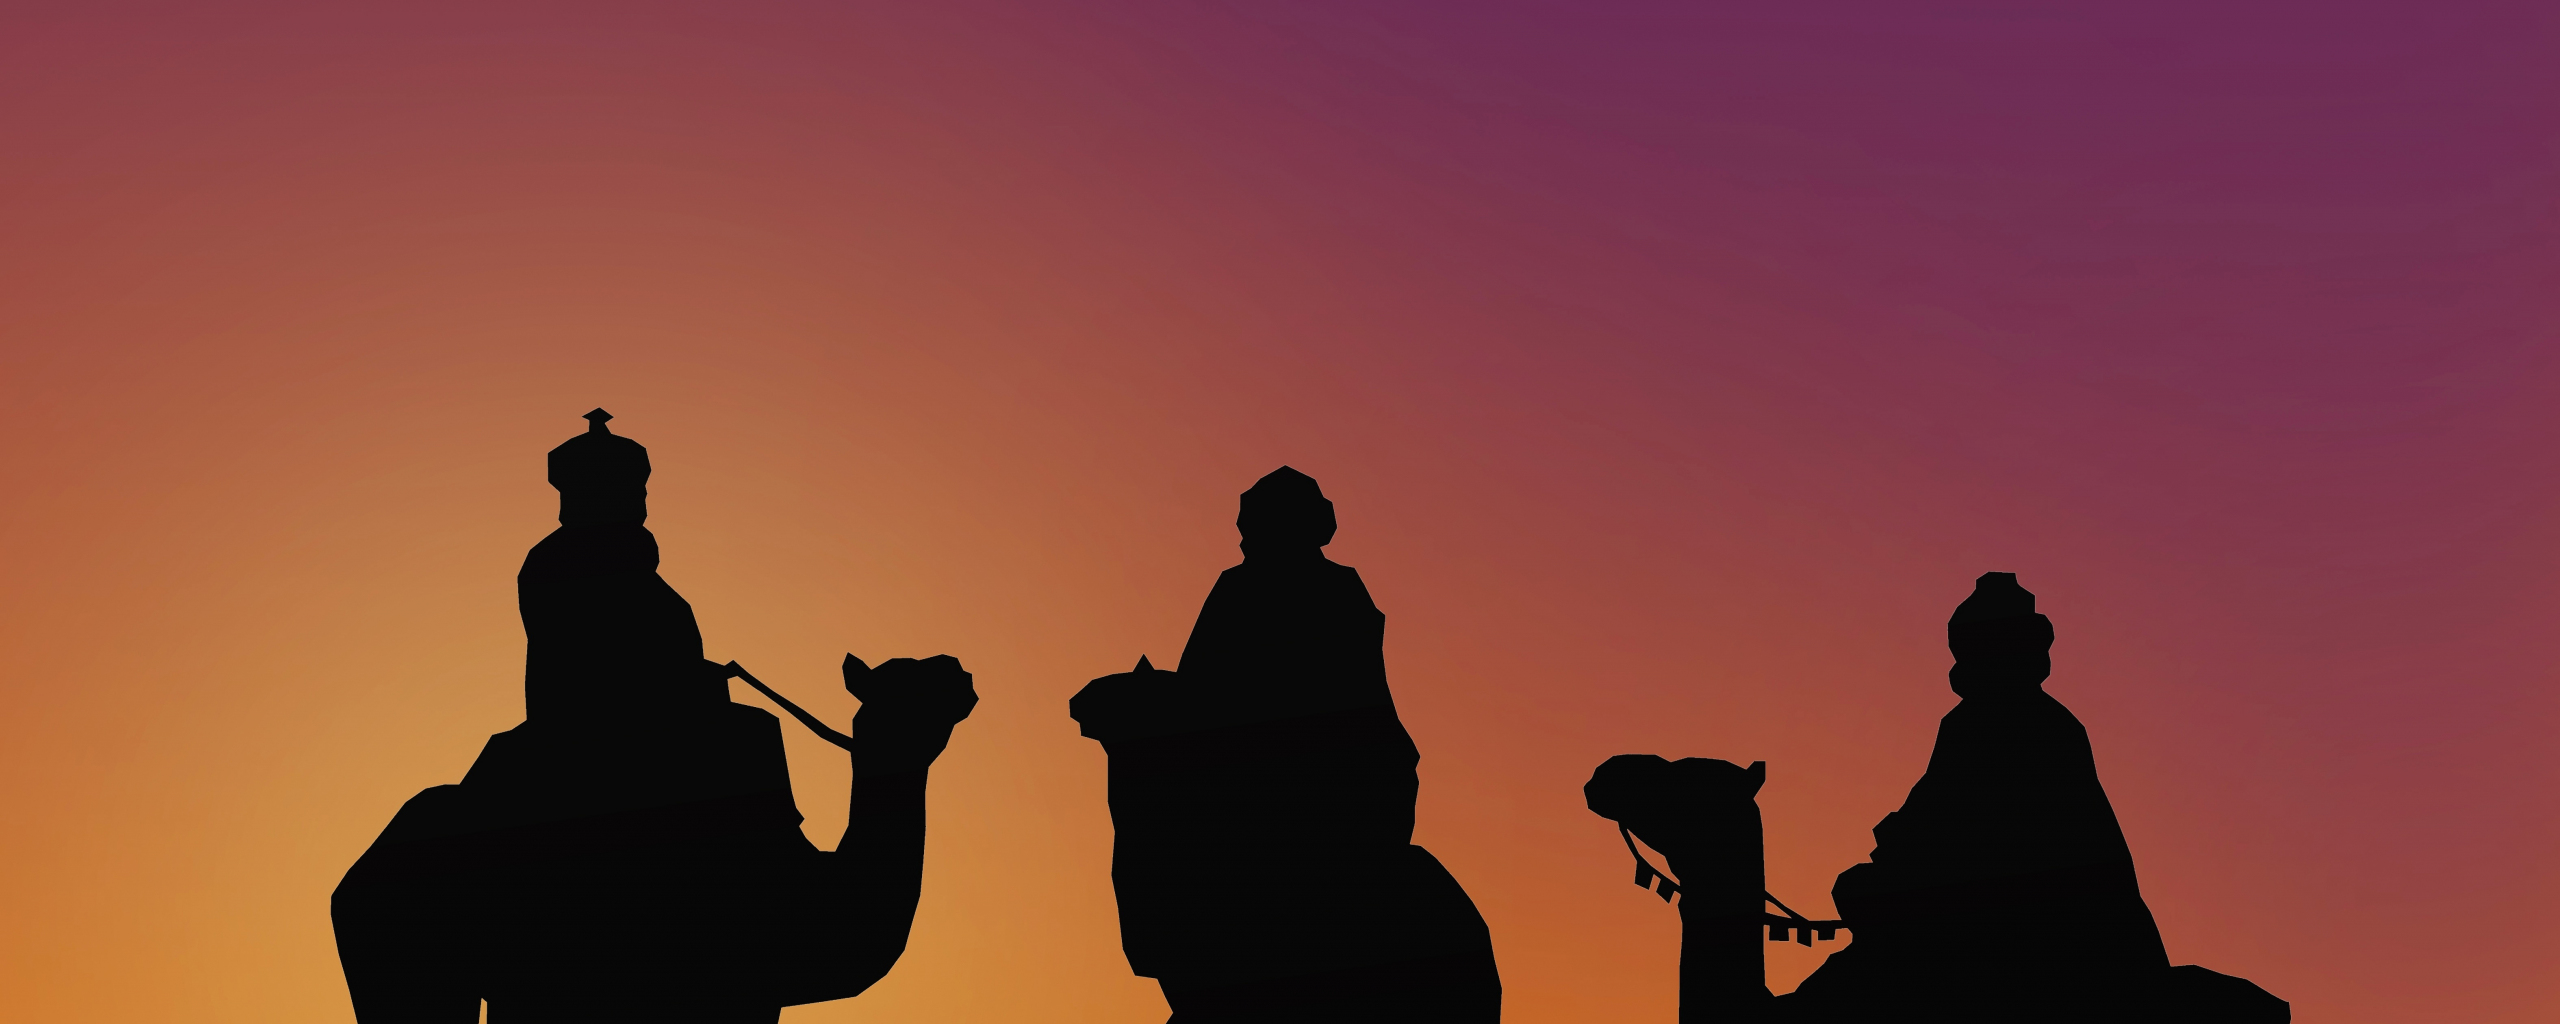 Epiphany, camel, silhouette, minimal, 2560x1024 wallpaper